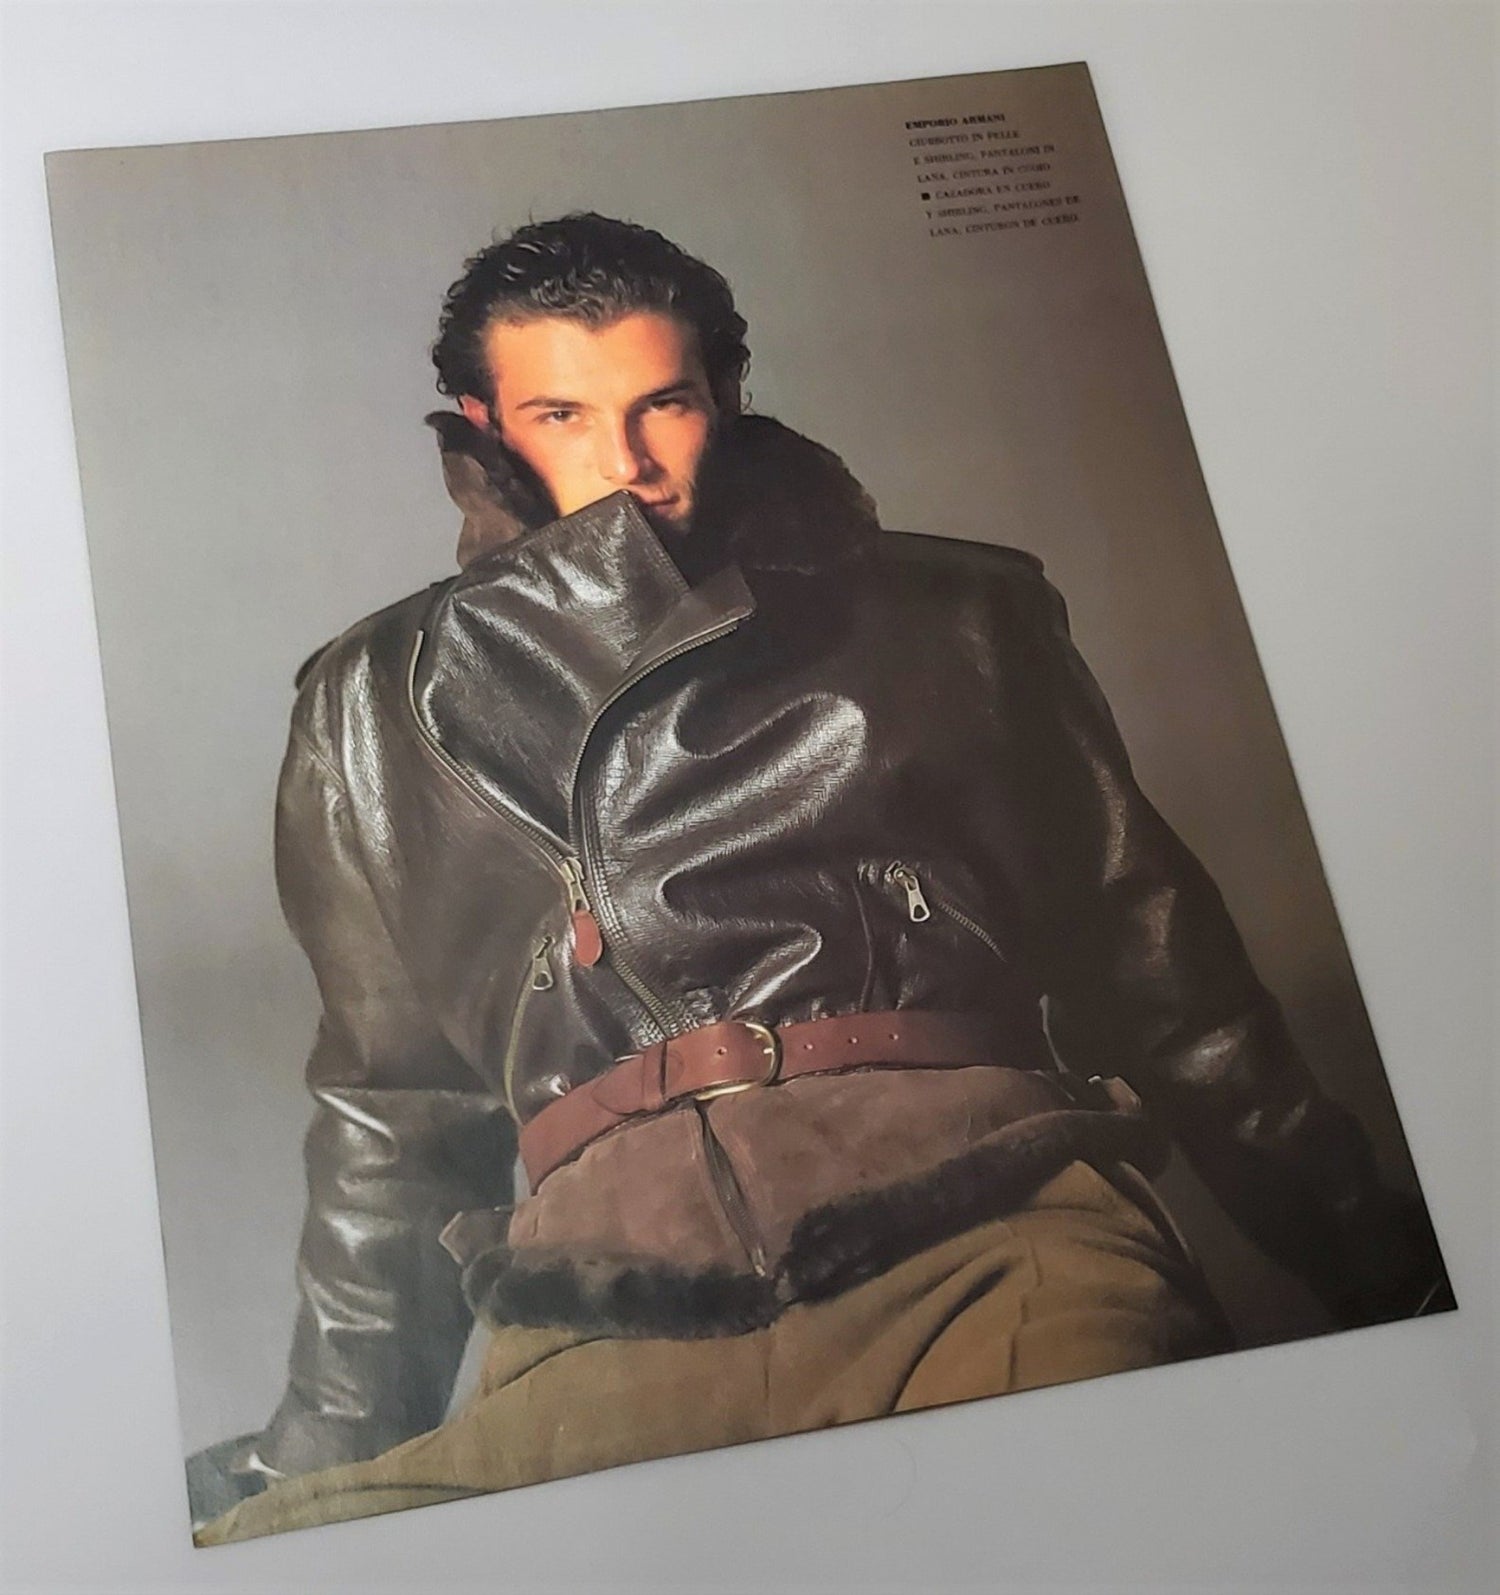 Original vintage 1989 Emporio Armani ad featured in L'UOMO magazine